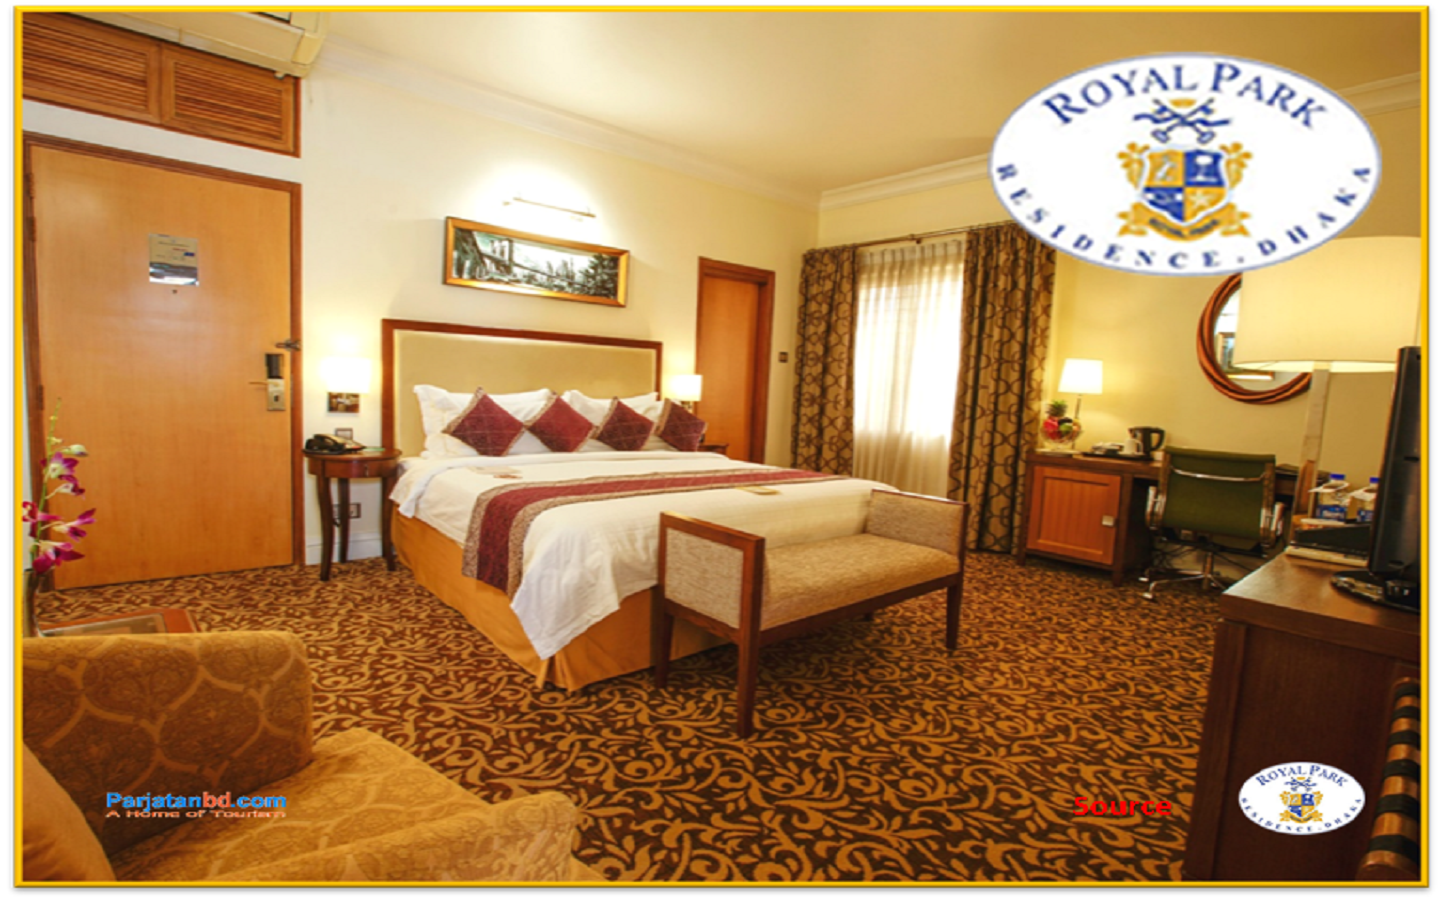 Room Royal King Room With Balcony  -1, Royal Park Residence Hotel, Banani